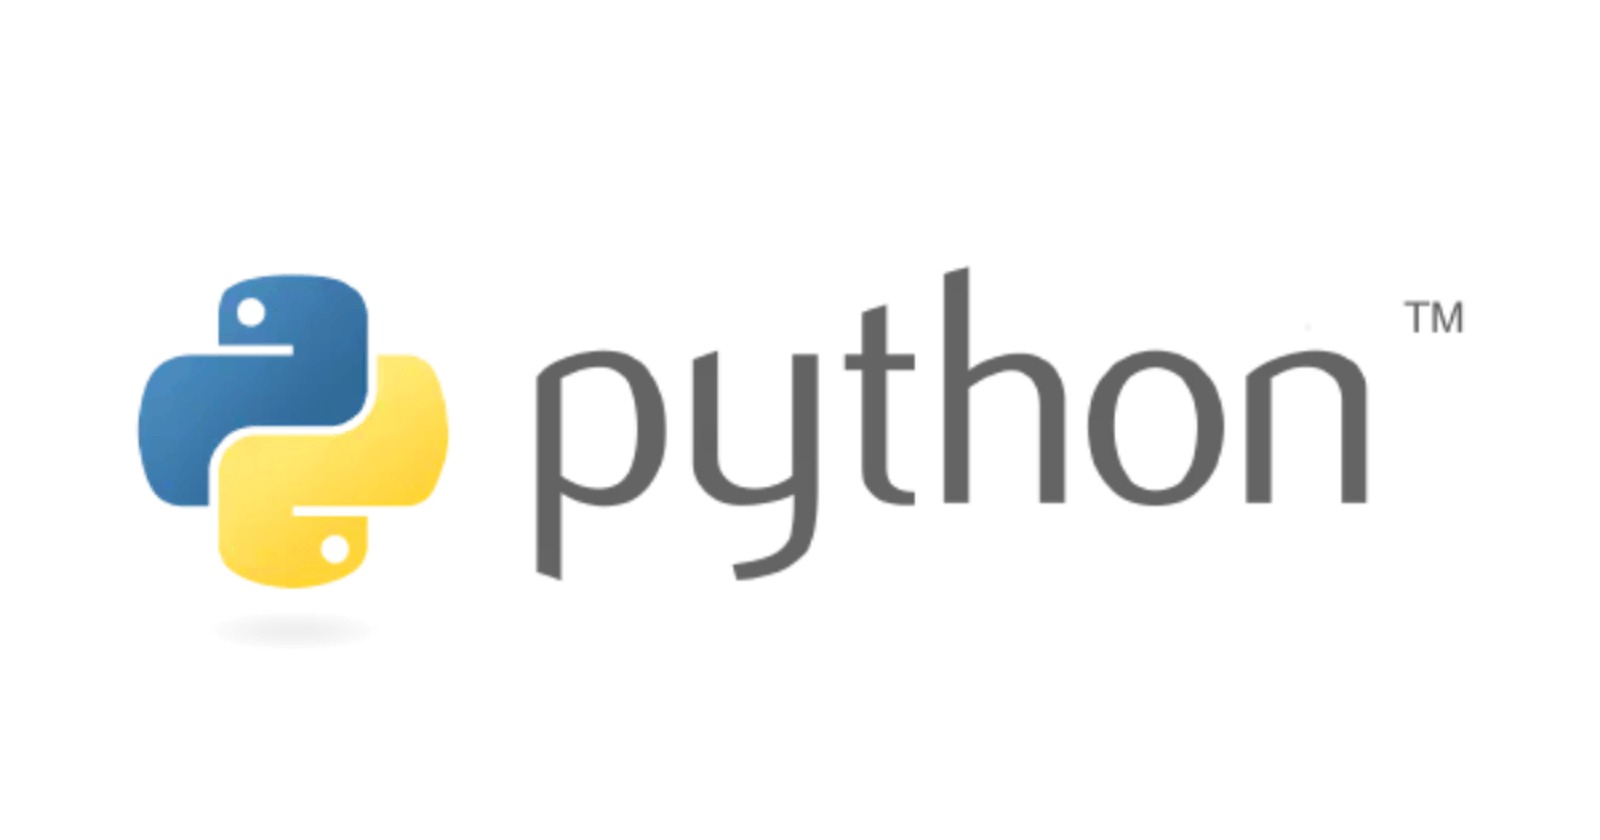 Python Usage and High Performance Tips Summary